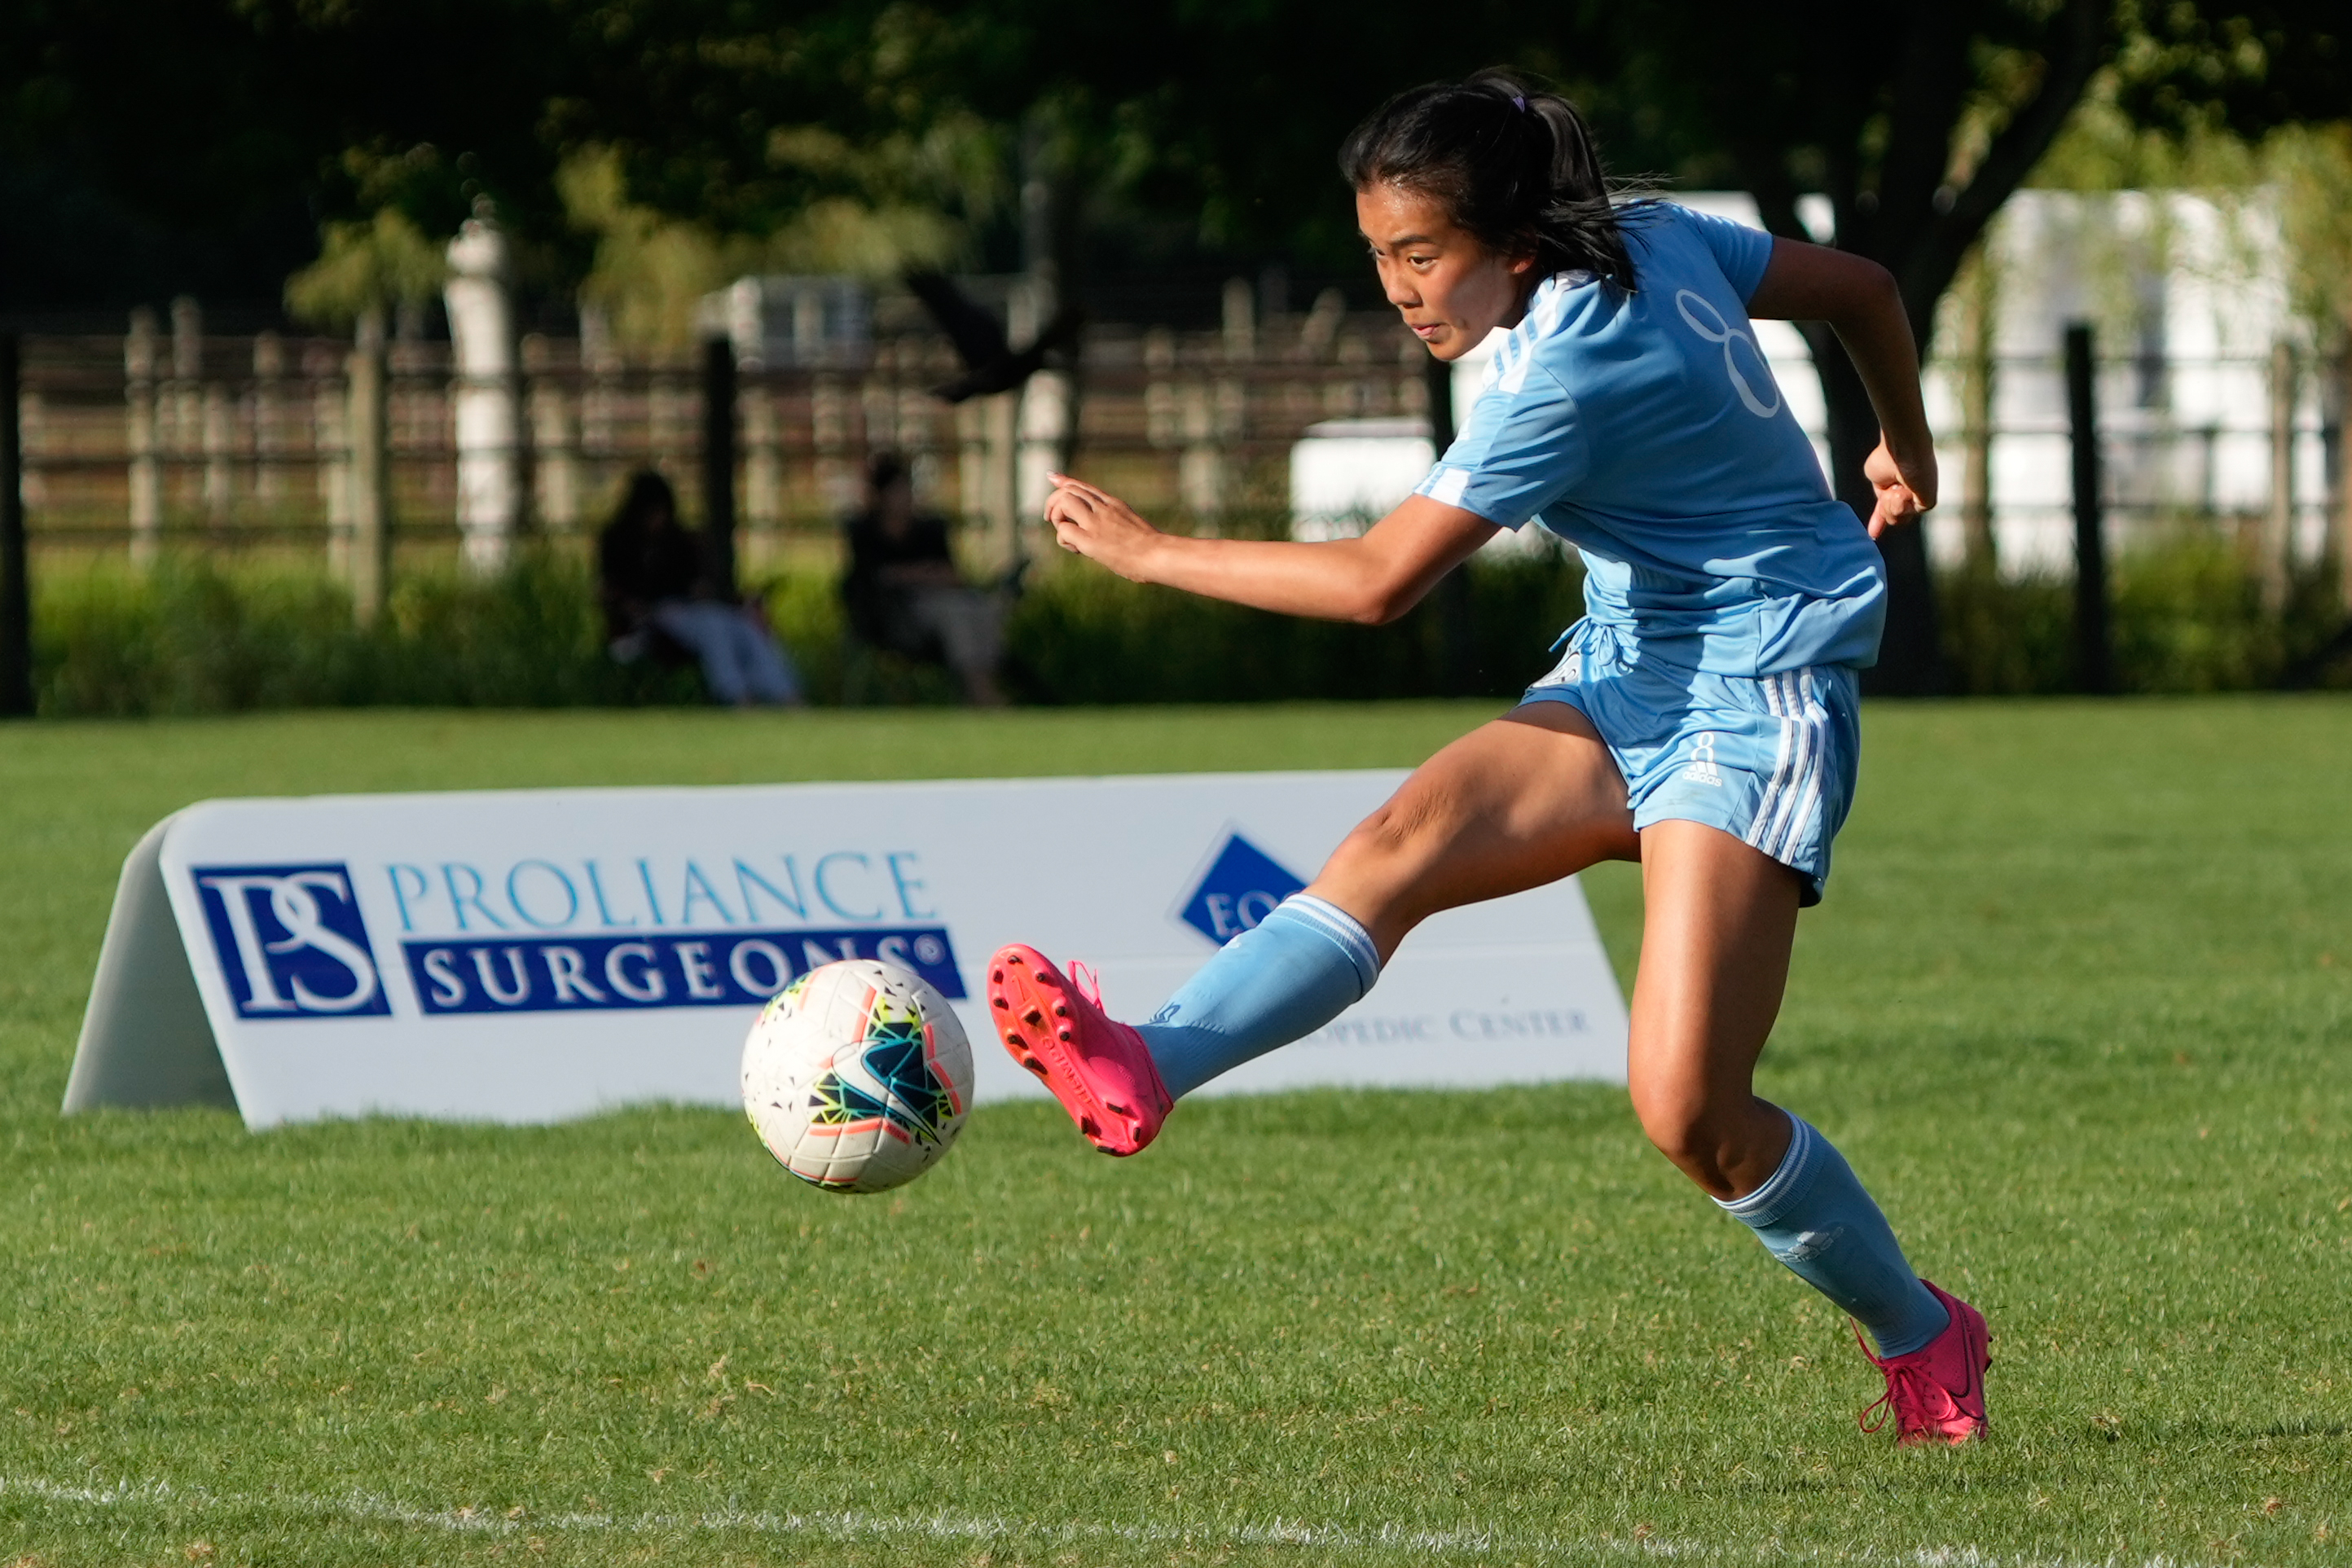 Female player wearing a light blue Adidas uniform kicking a soccer ball during a game.